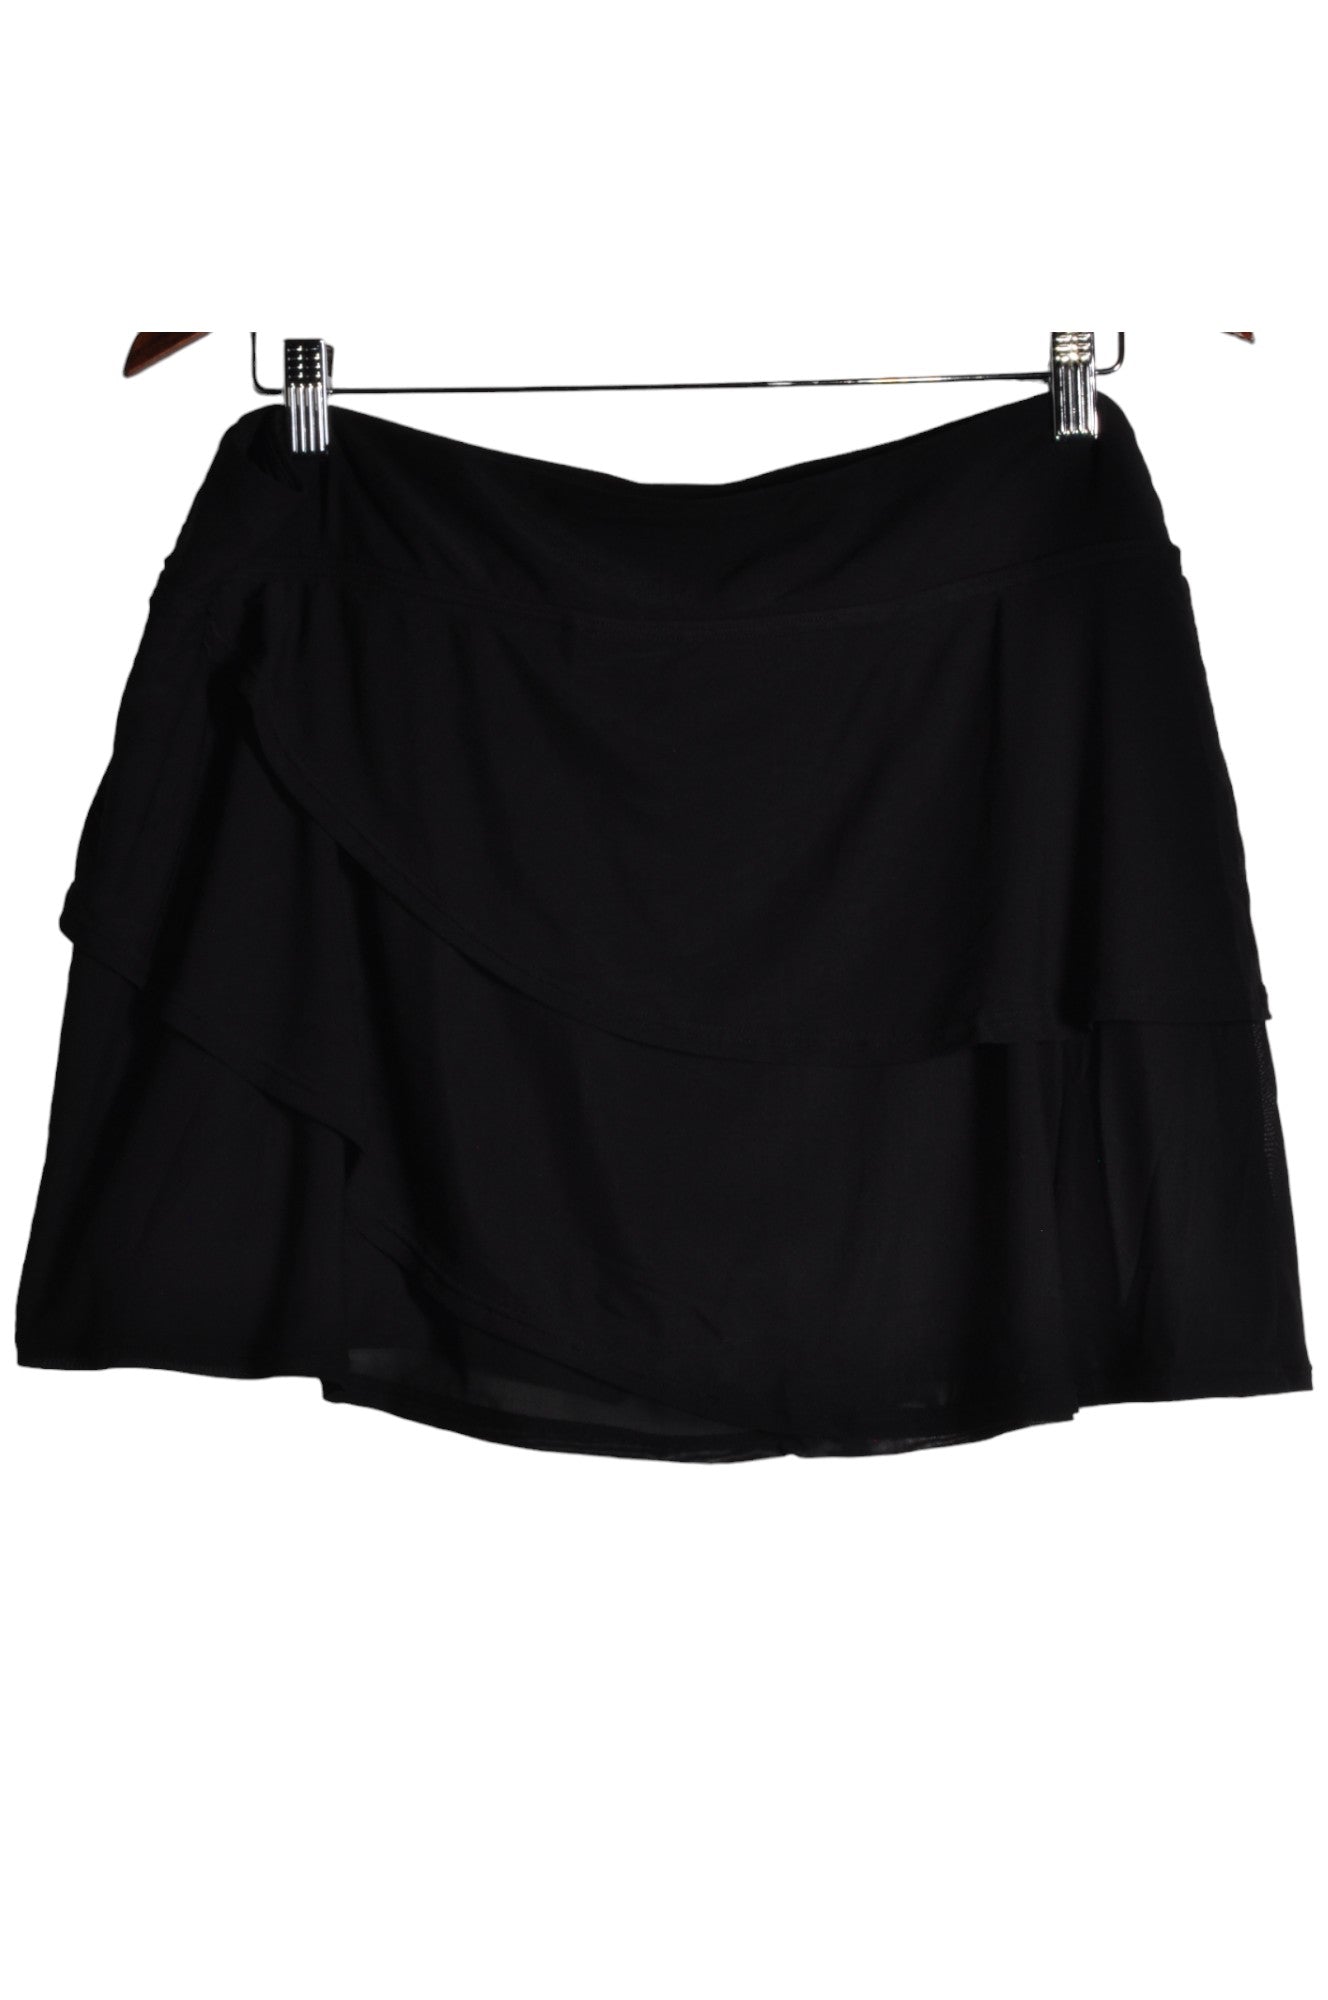 COCO RAVES Women Tankinis Regular fit in Black - Size 2X | 55 $ KOOP